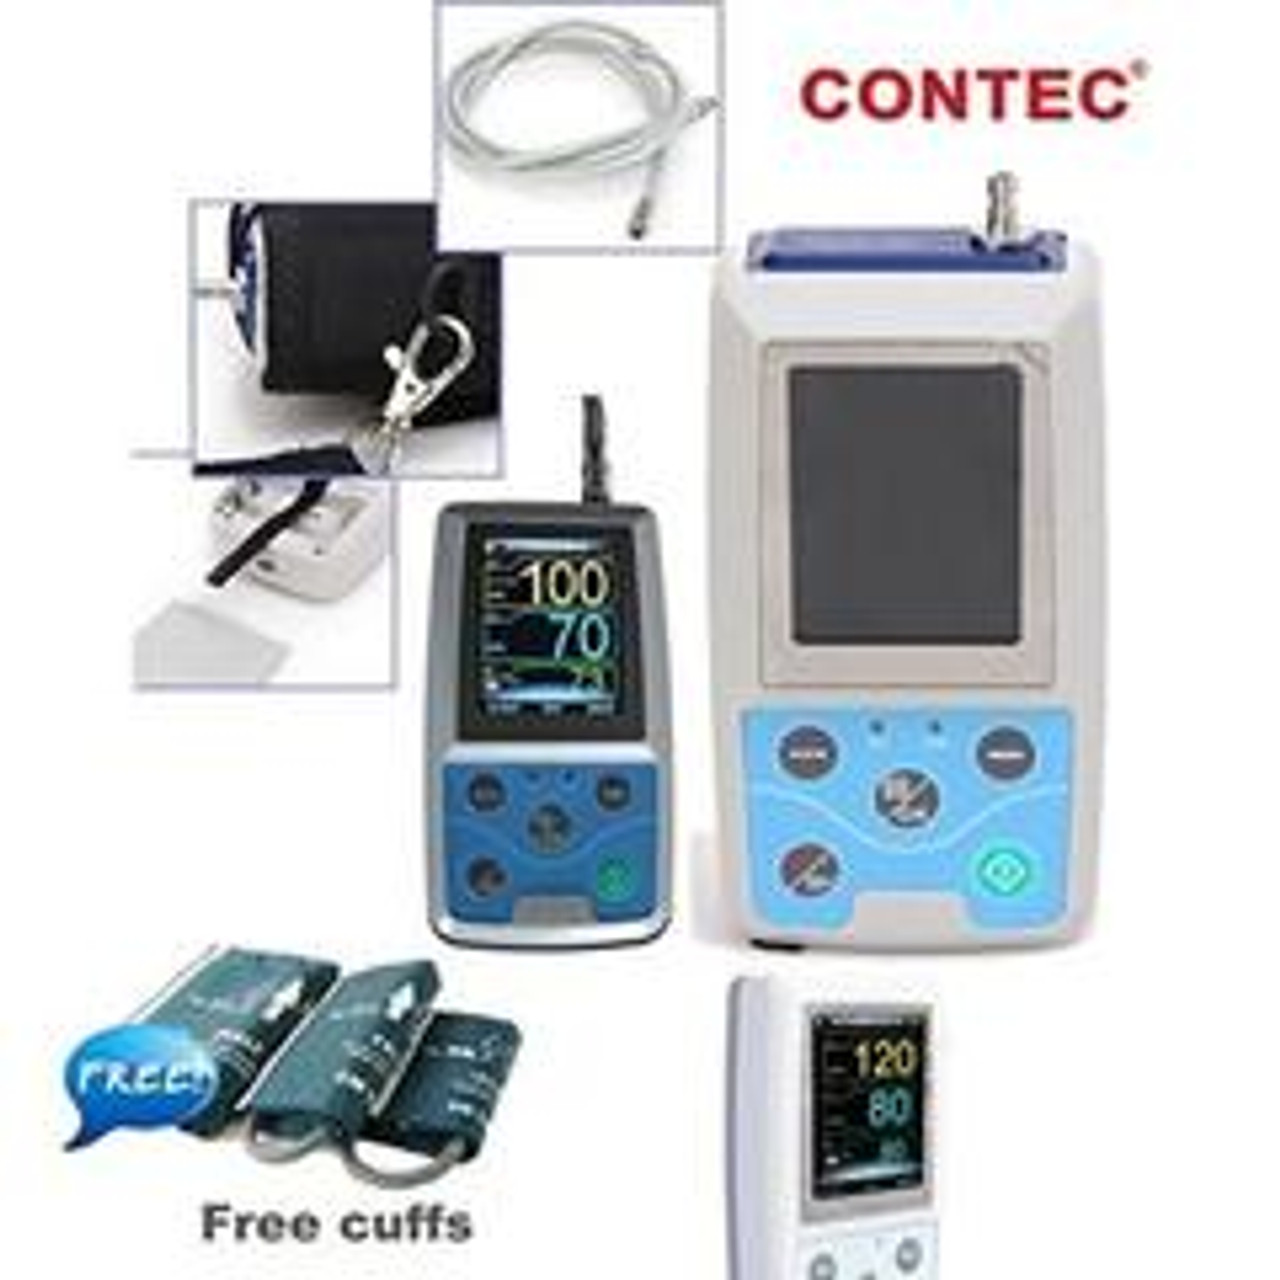 Buy Ambulatory Blood Pressure Monitors (ABPM) online